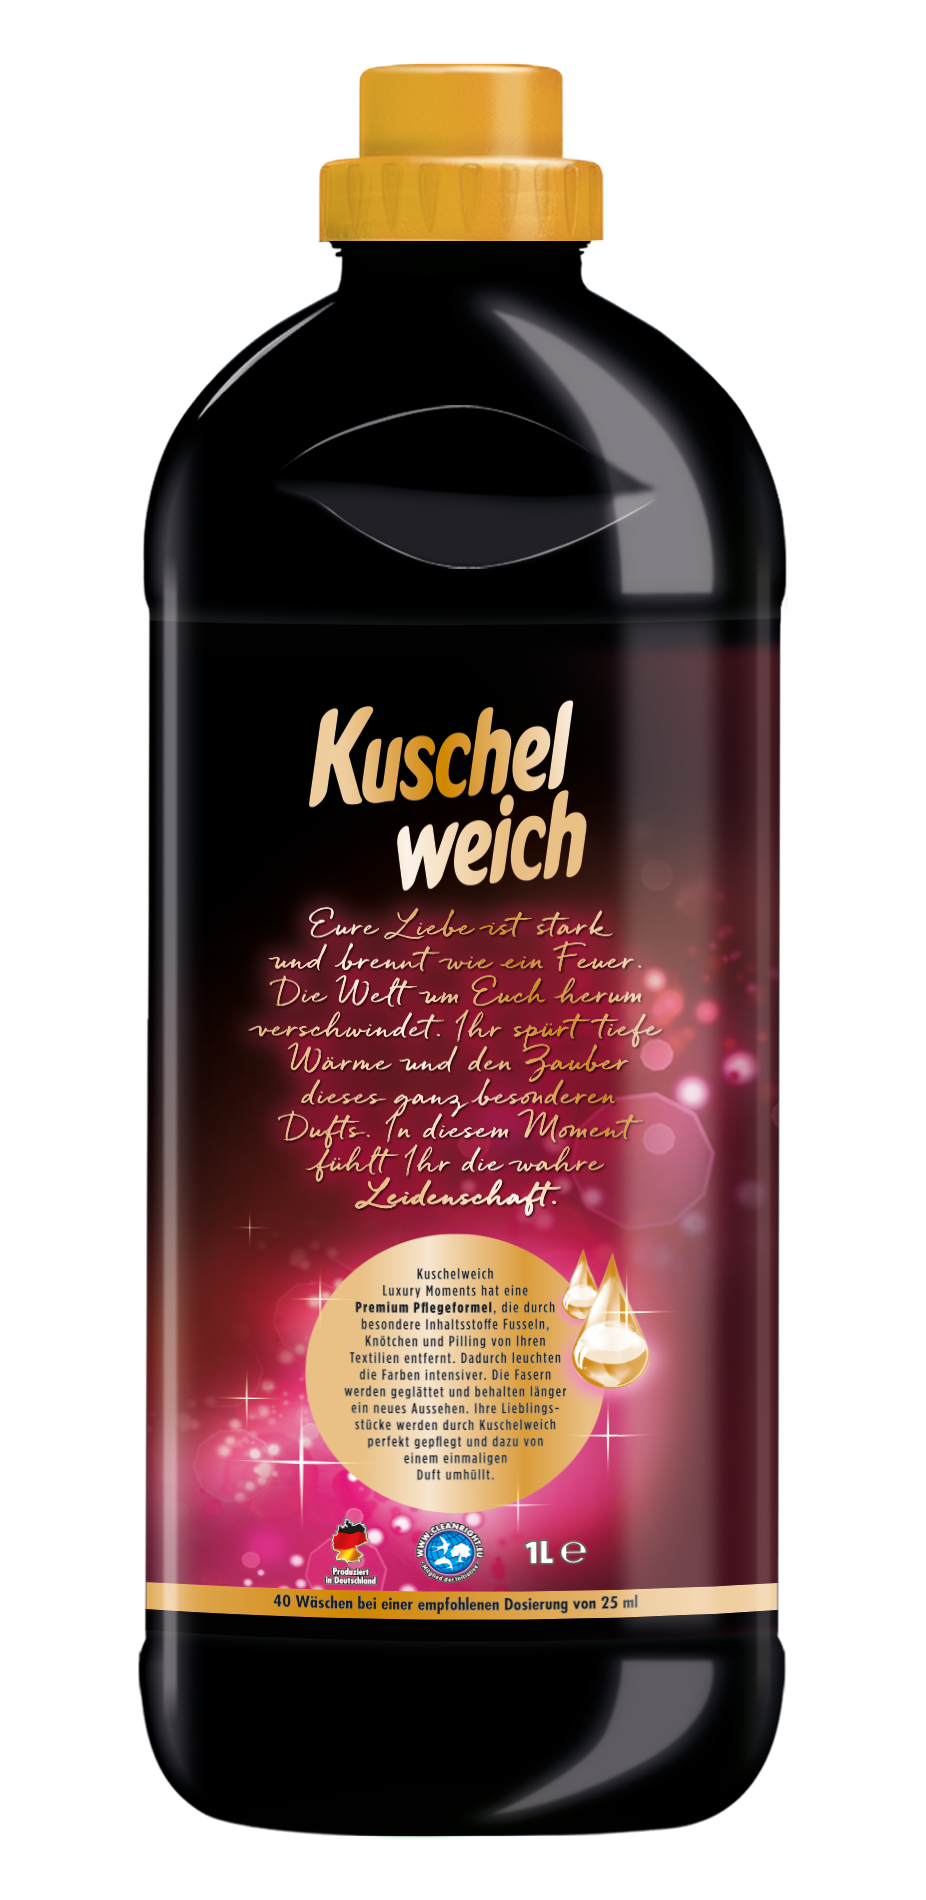 Kuschelweich Luxury Moments 40 WL